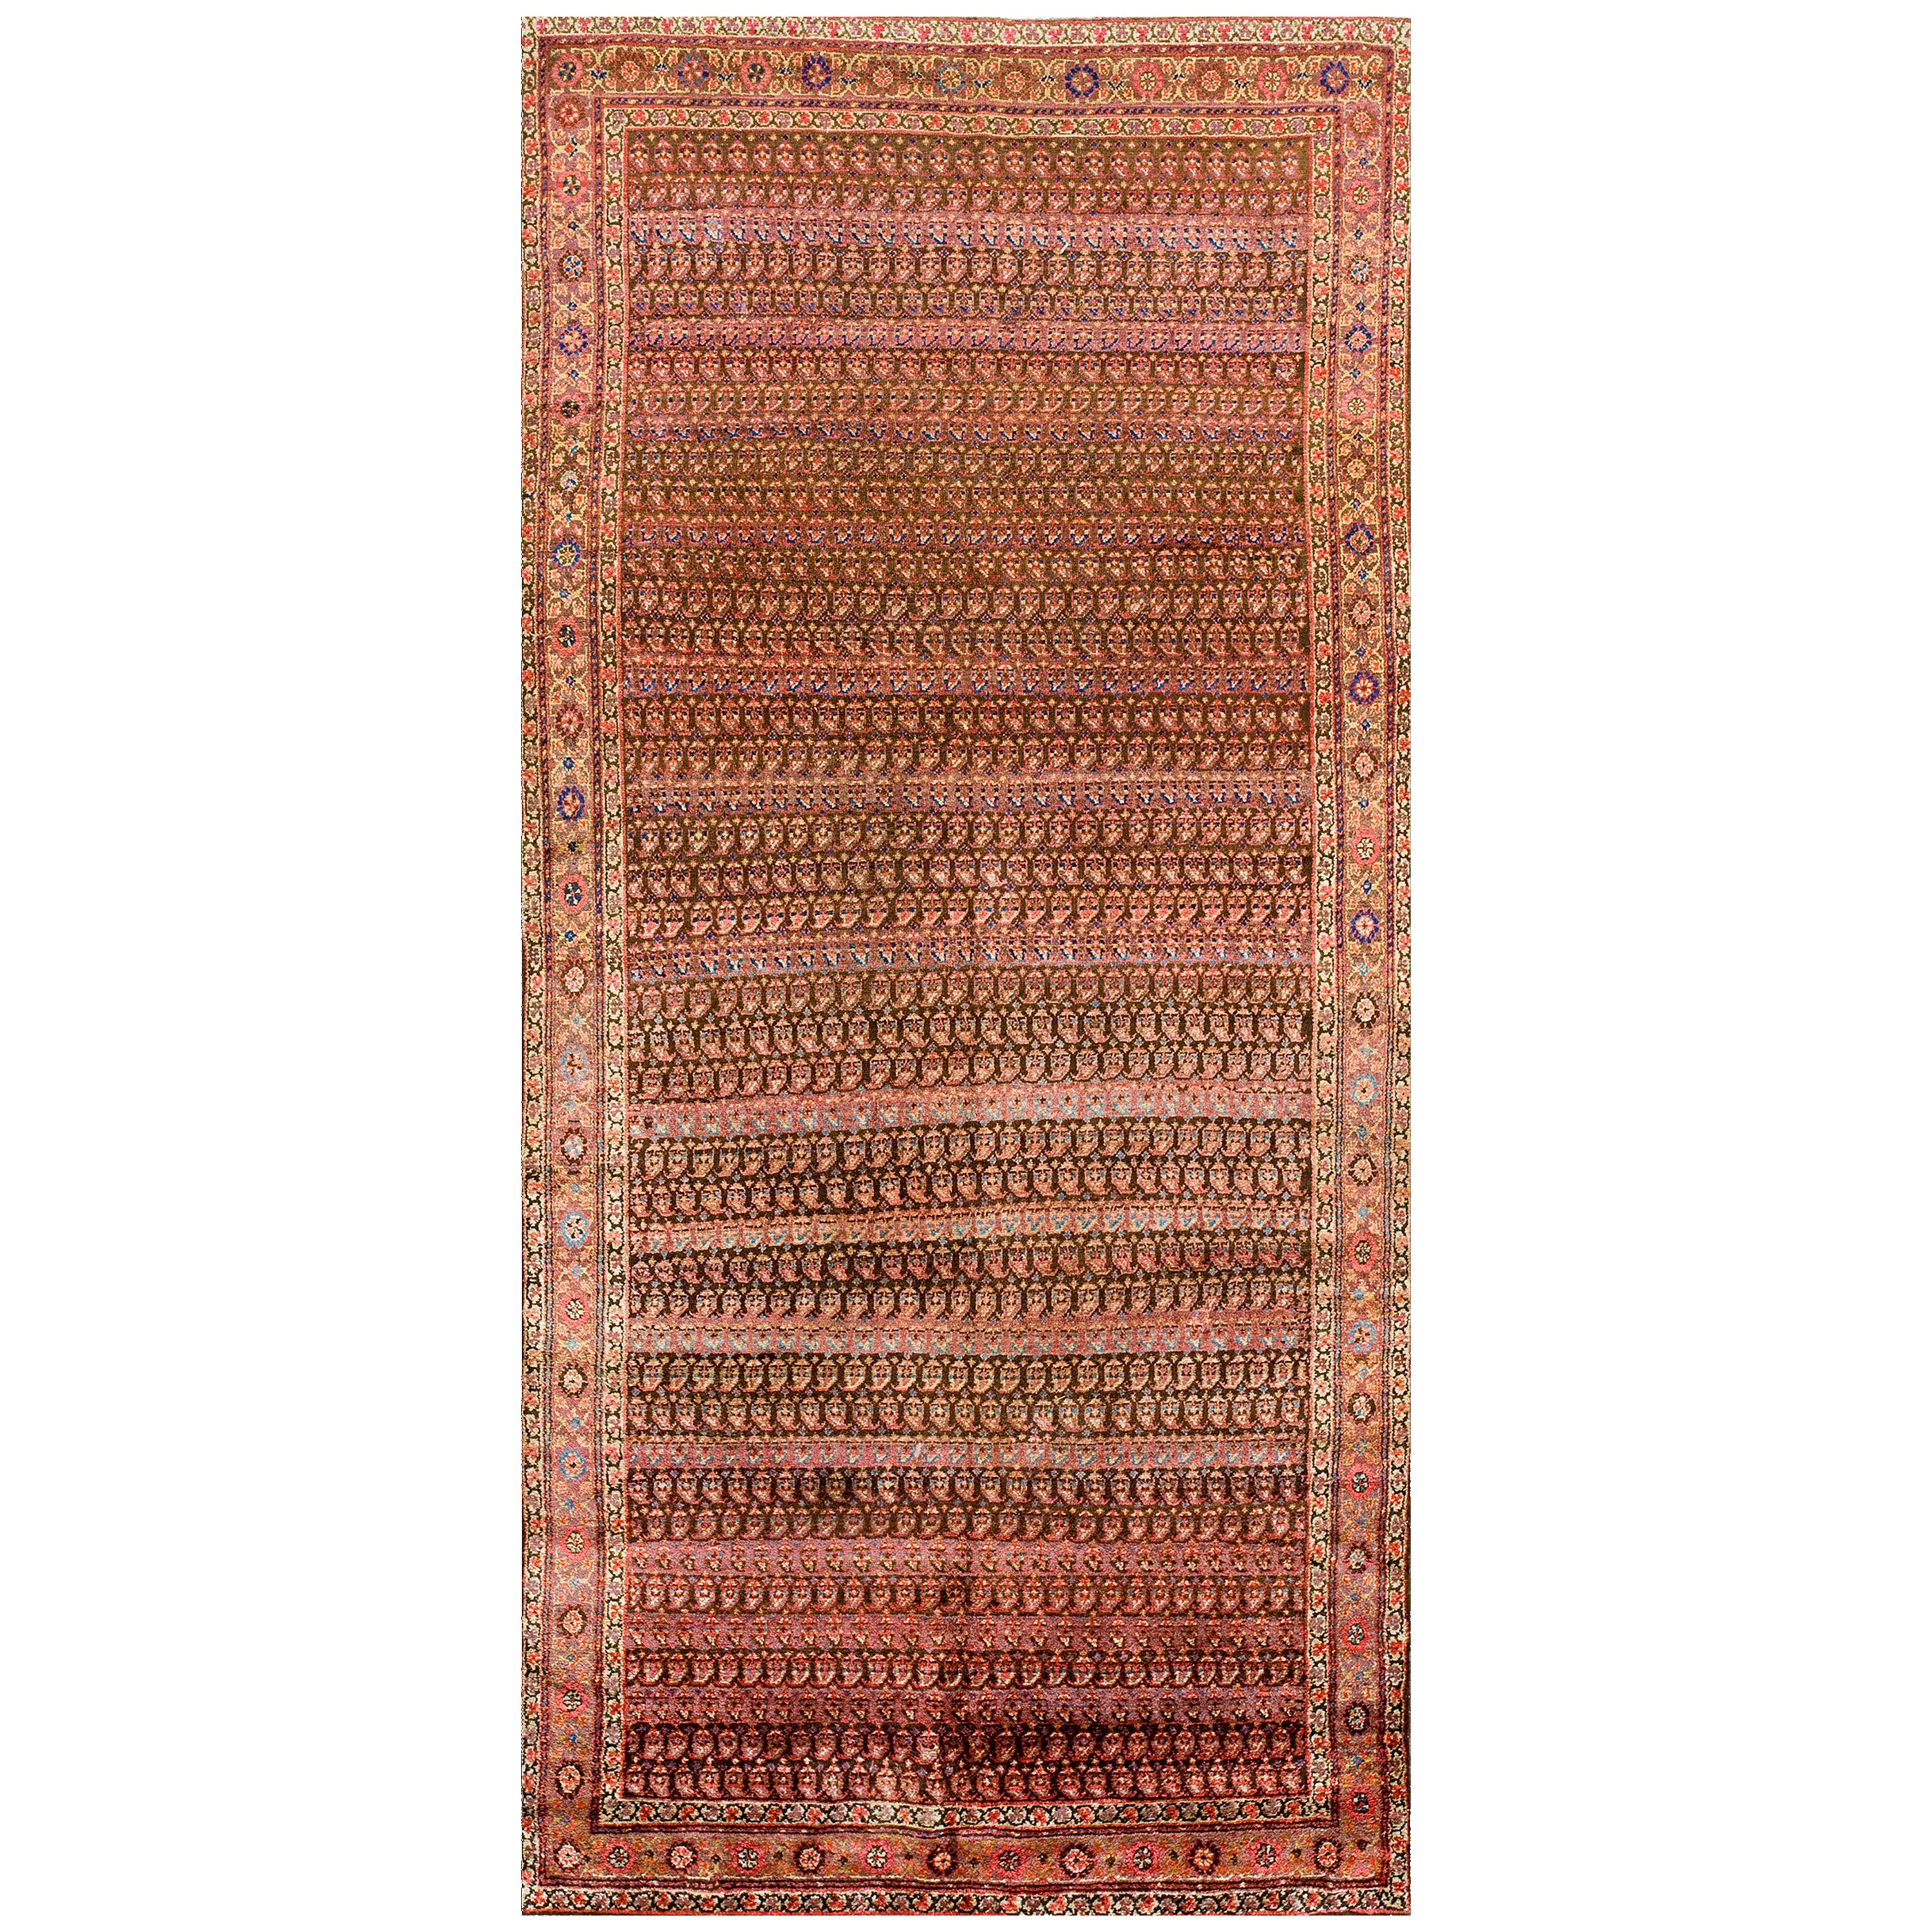 Late 19th Century Persian Malayer Carpet ( 4'2" x 8'10" - 127 x 270 )